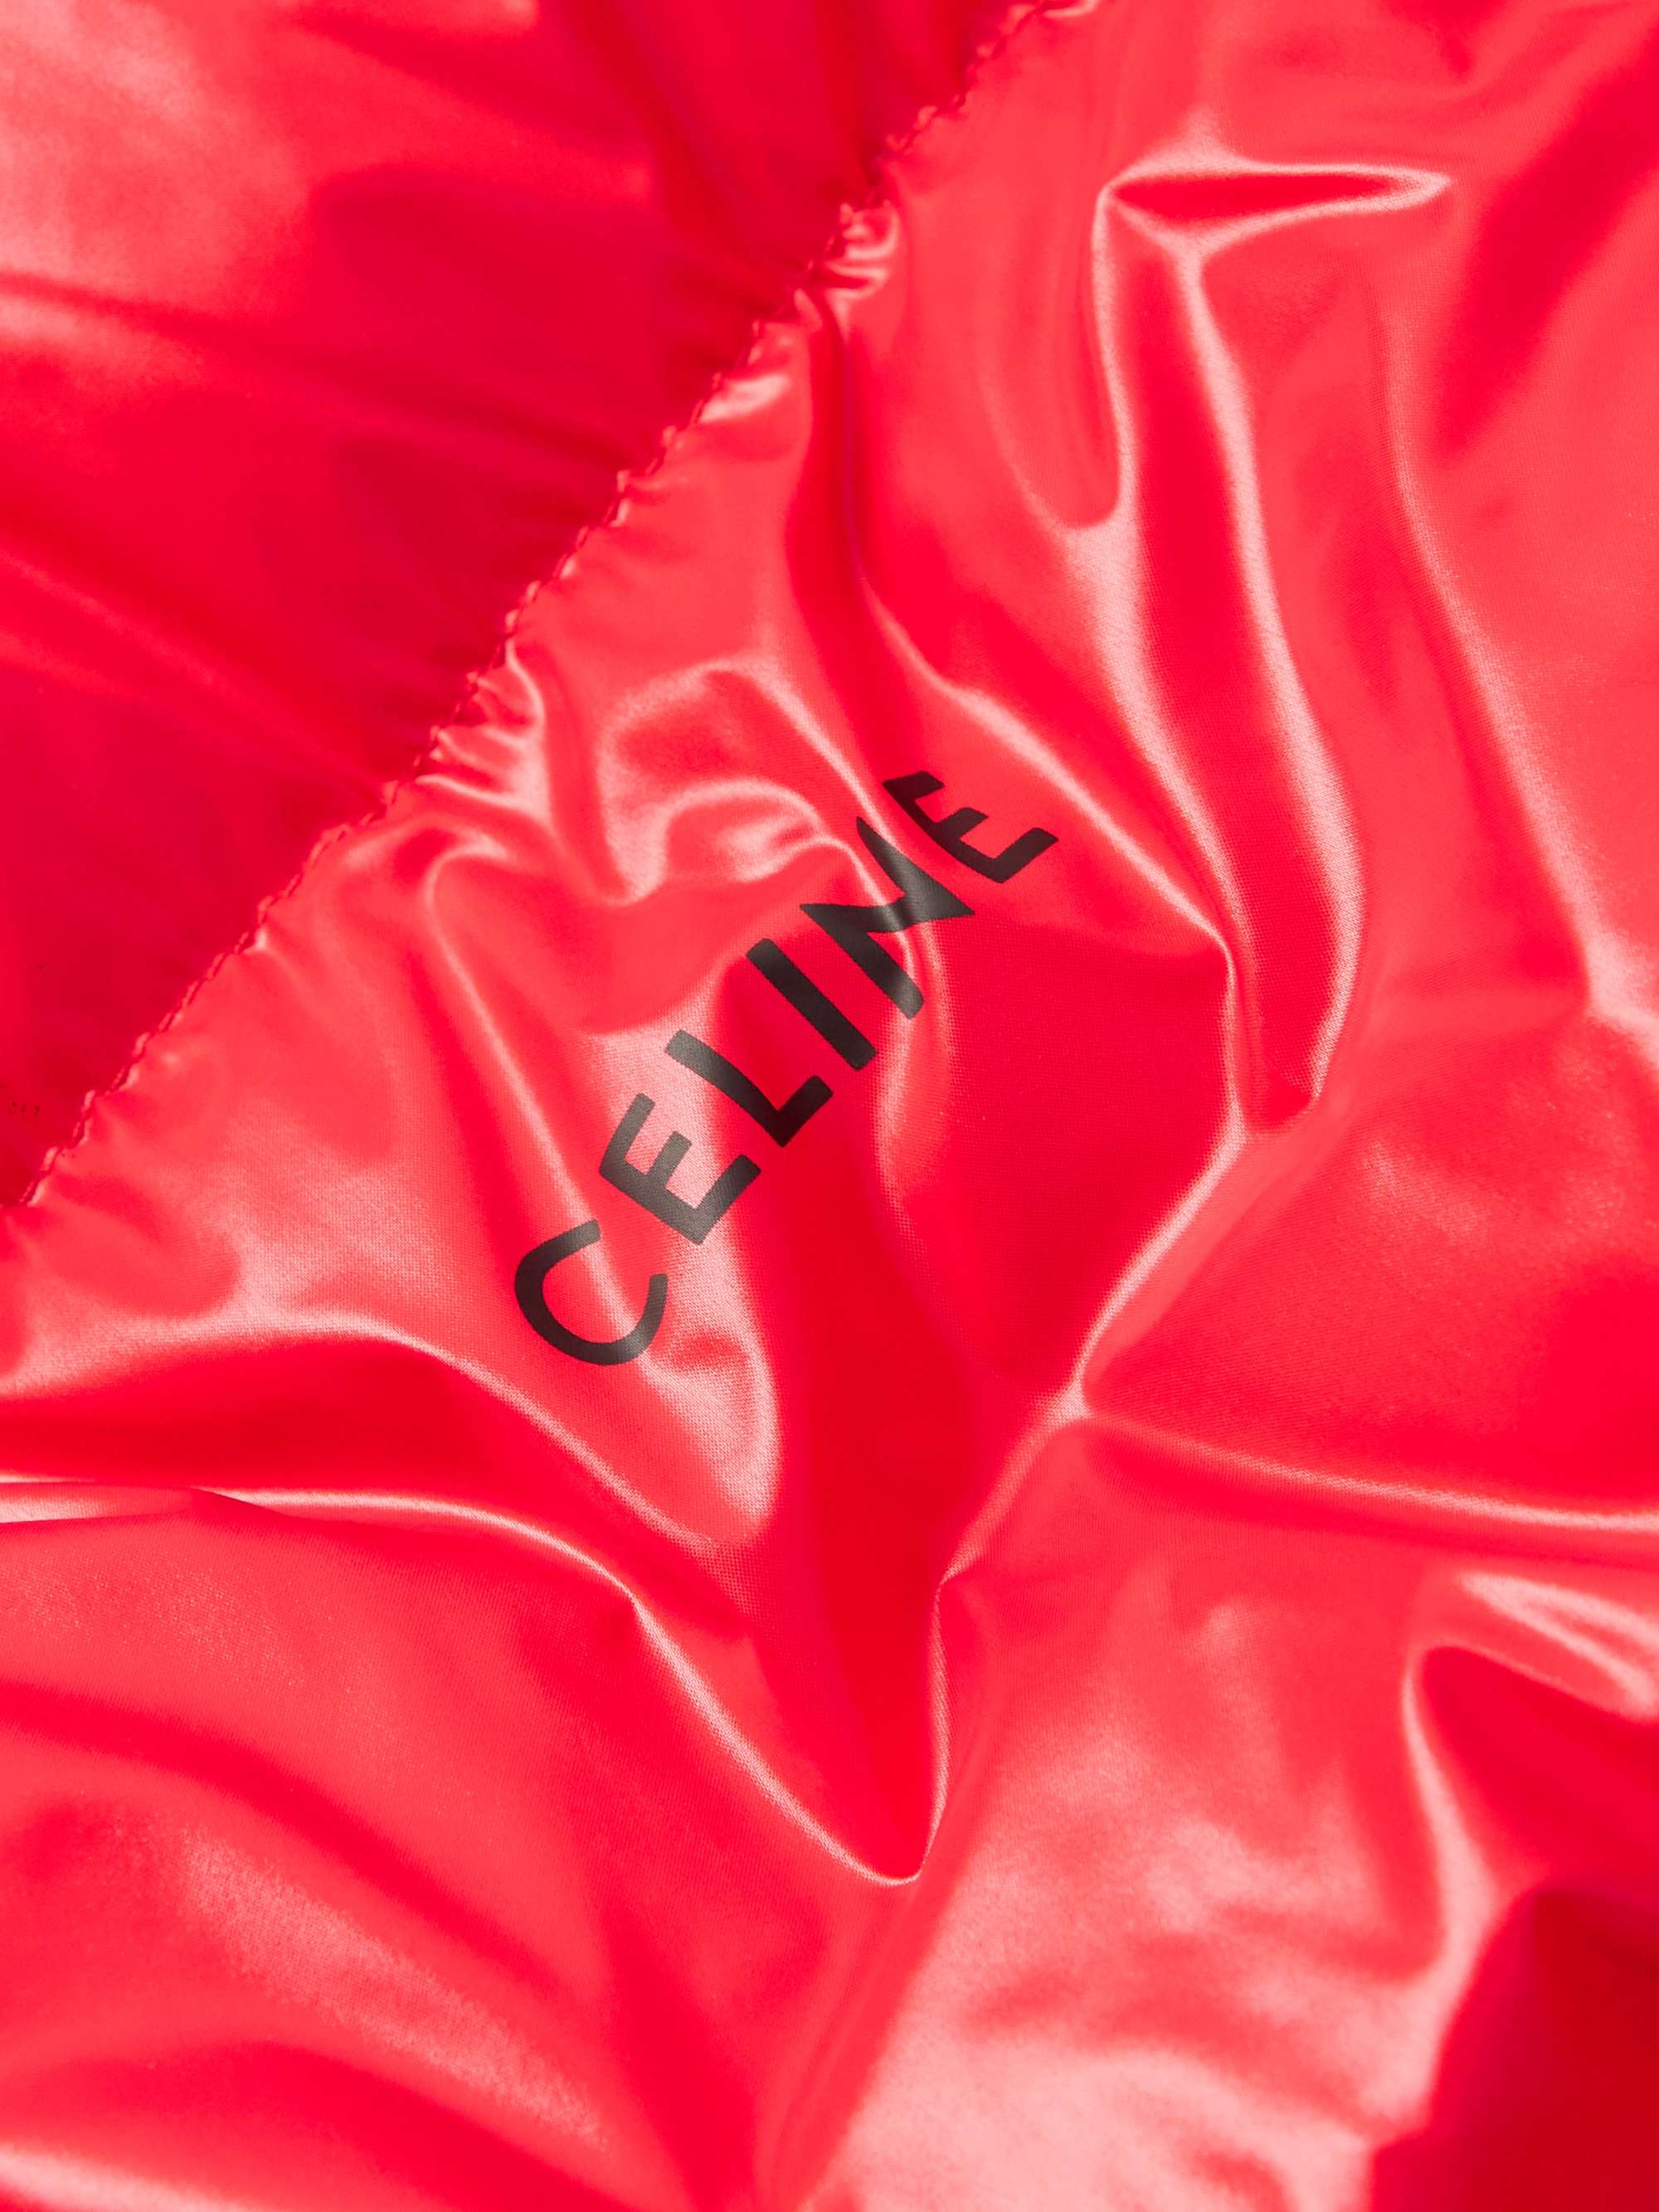 CELINE Doudoune Logo-Print Quilted Shell Down Coat